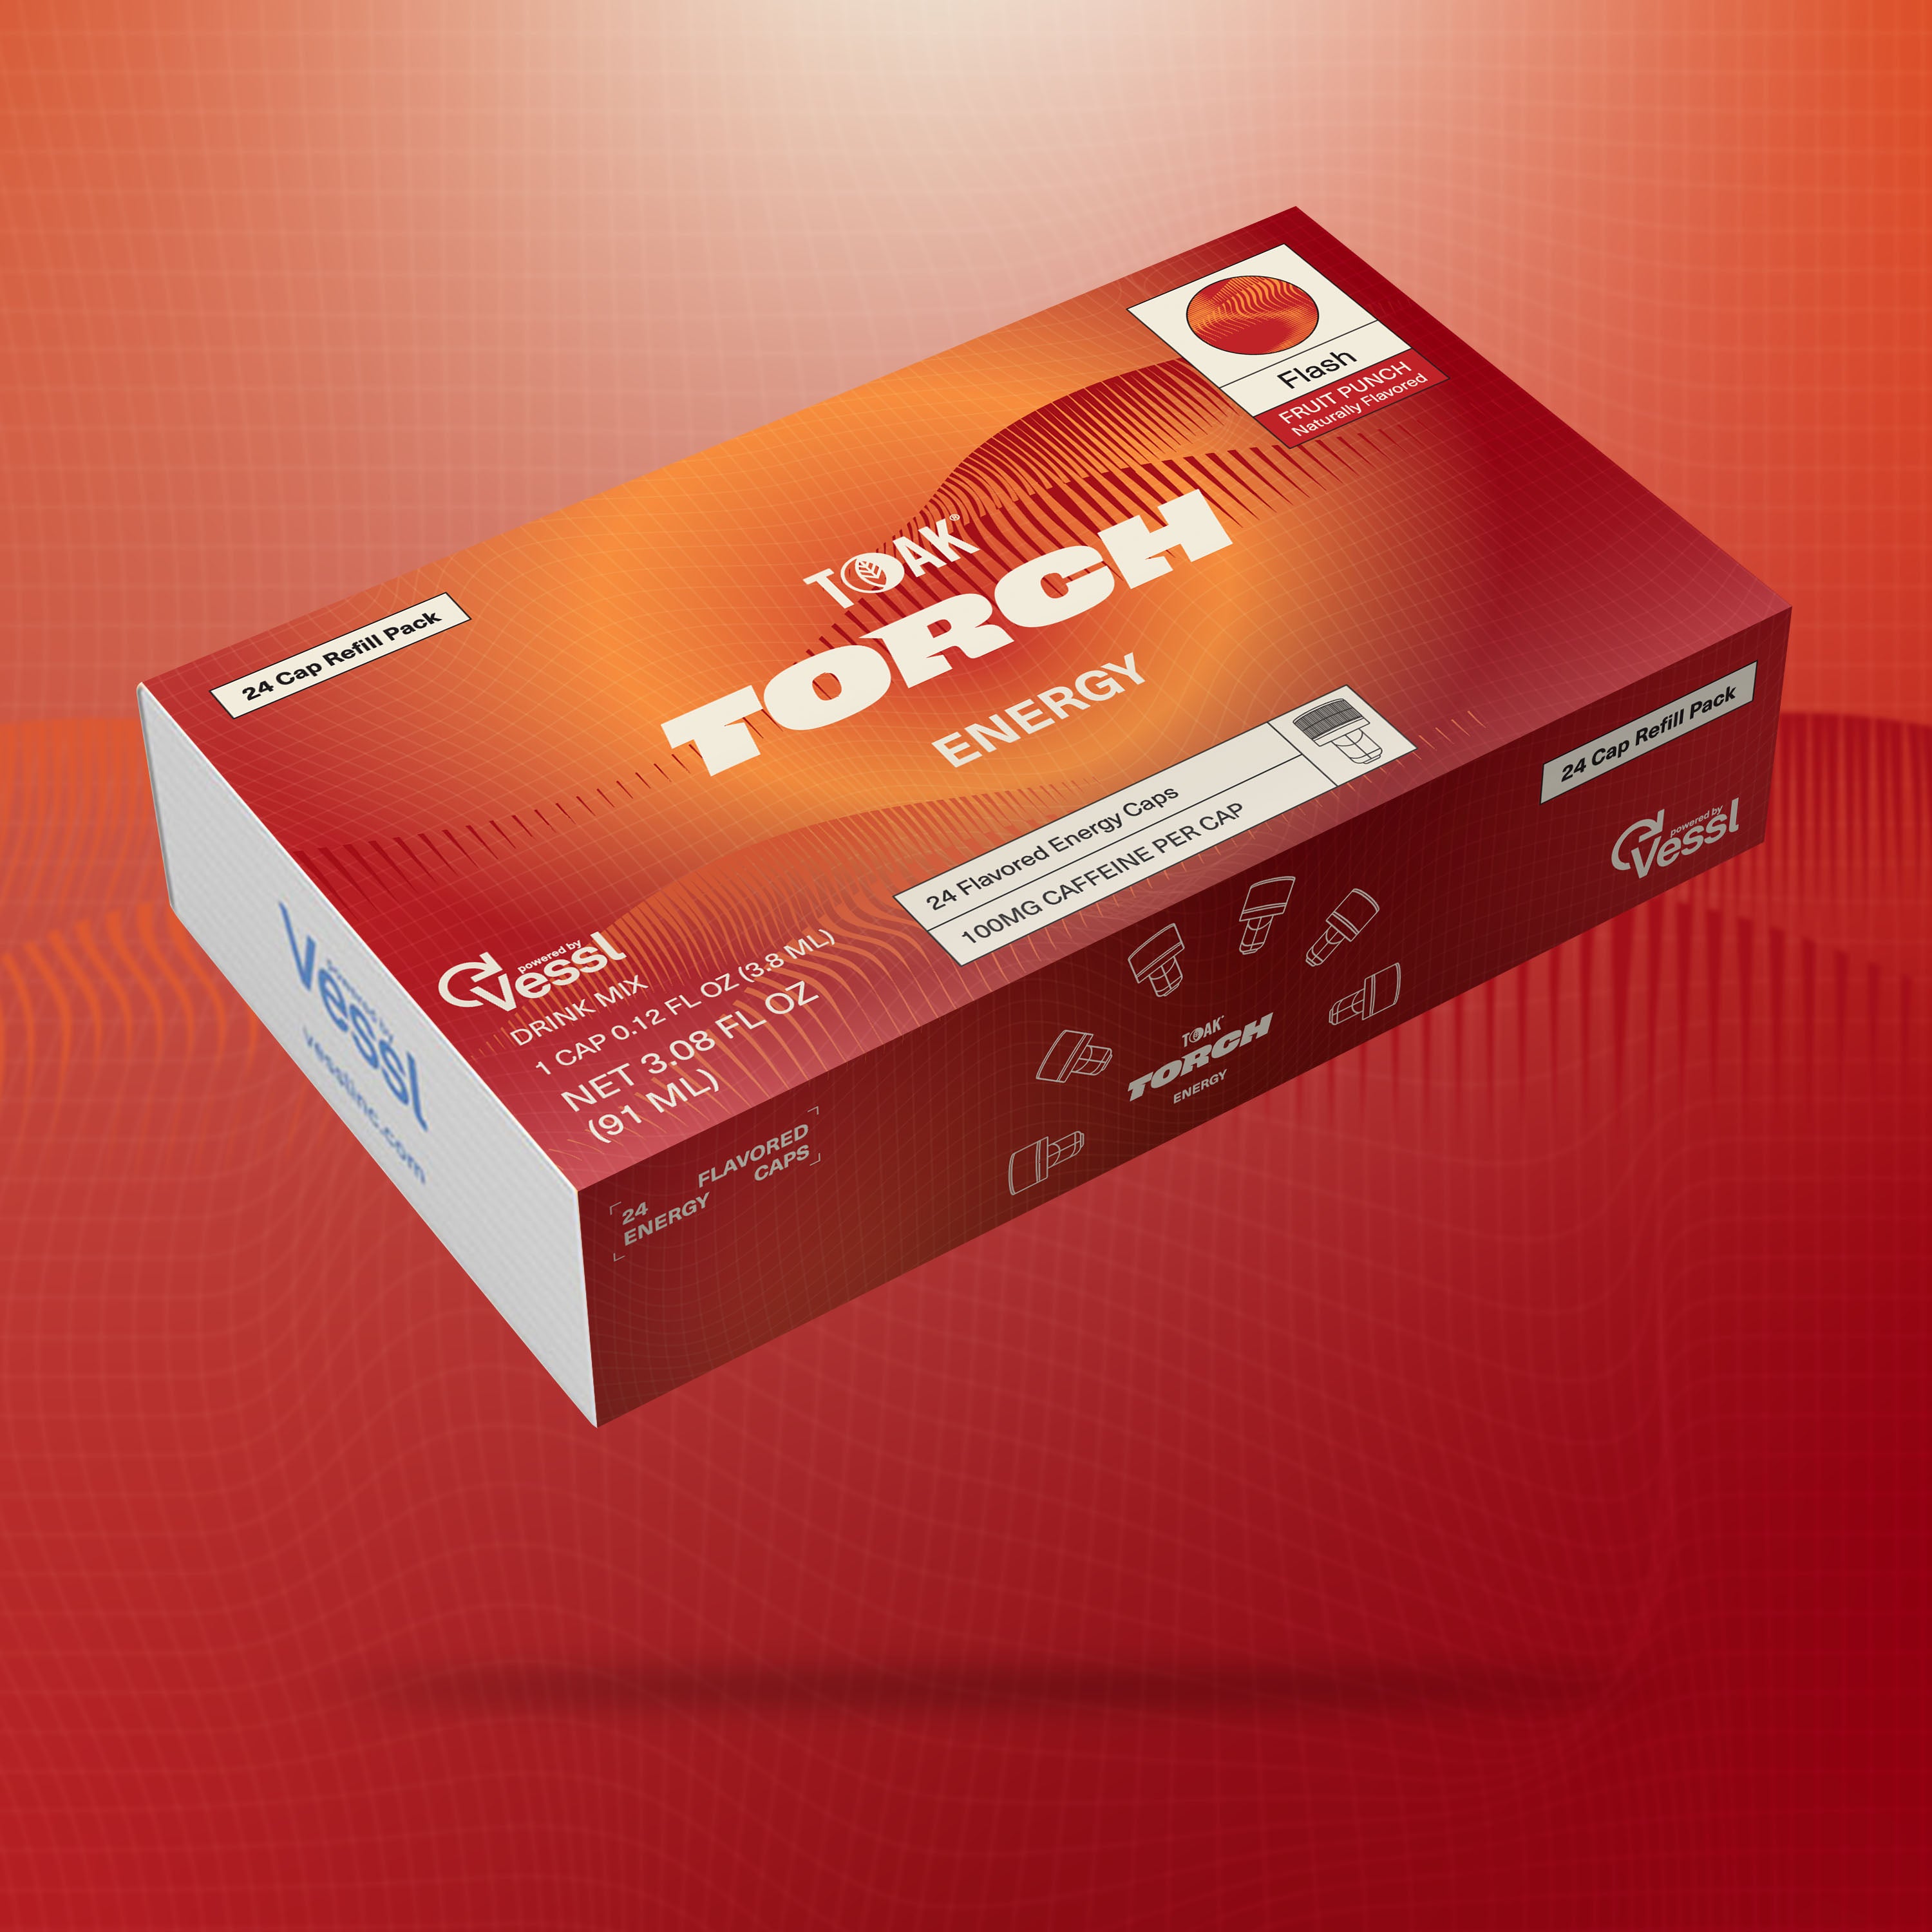 TOAK Torch Energy: Flash Flavor 24 Cap Refill Pack